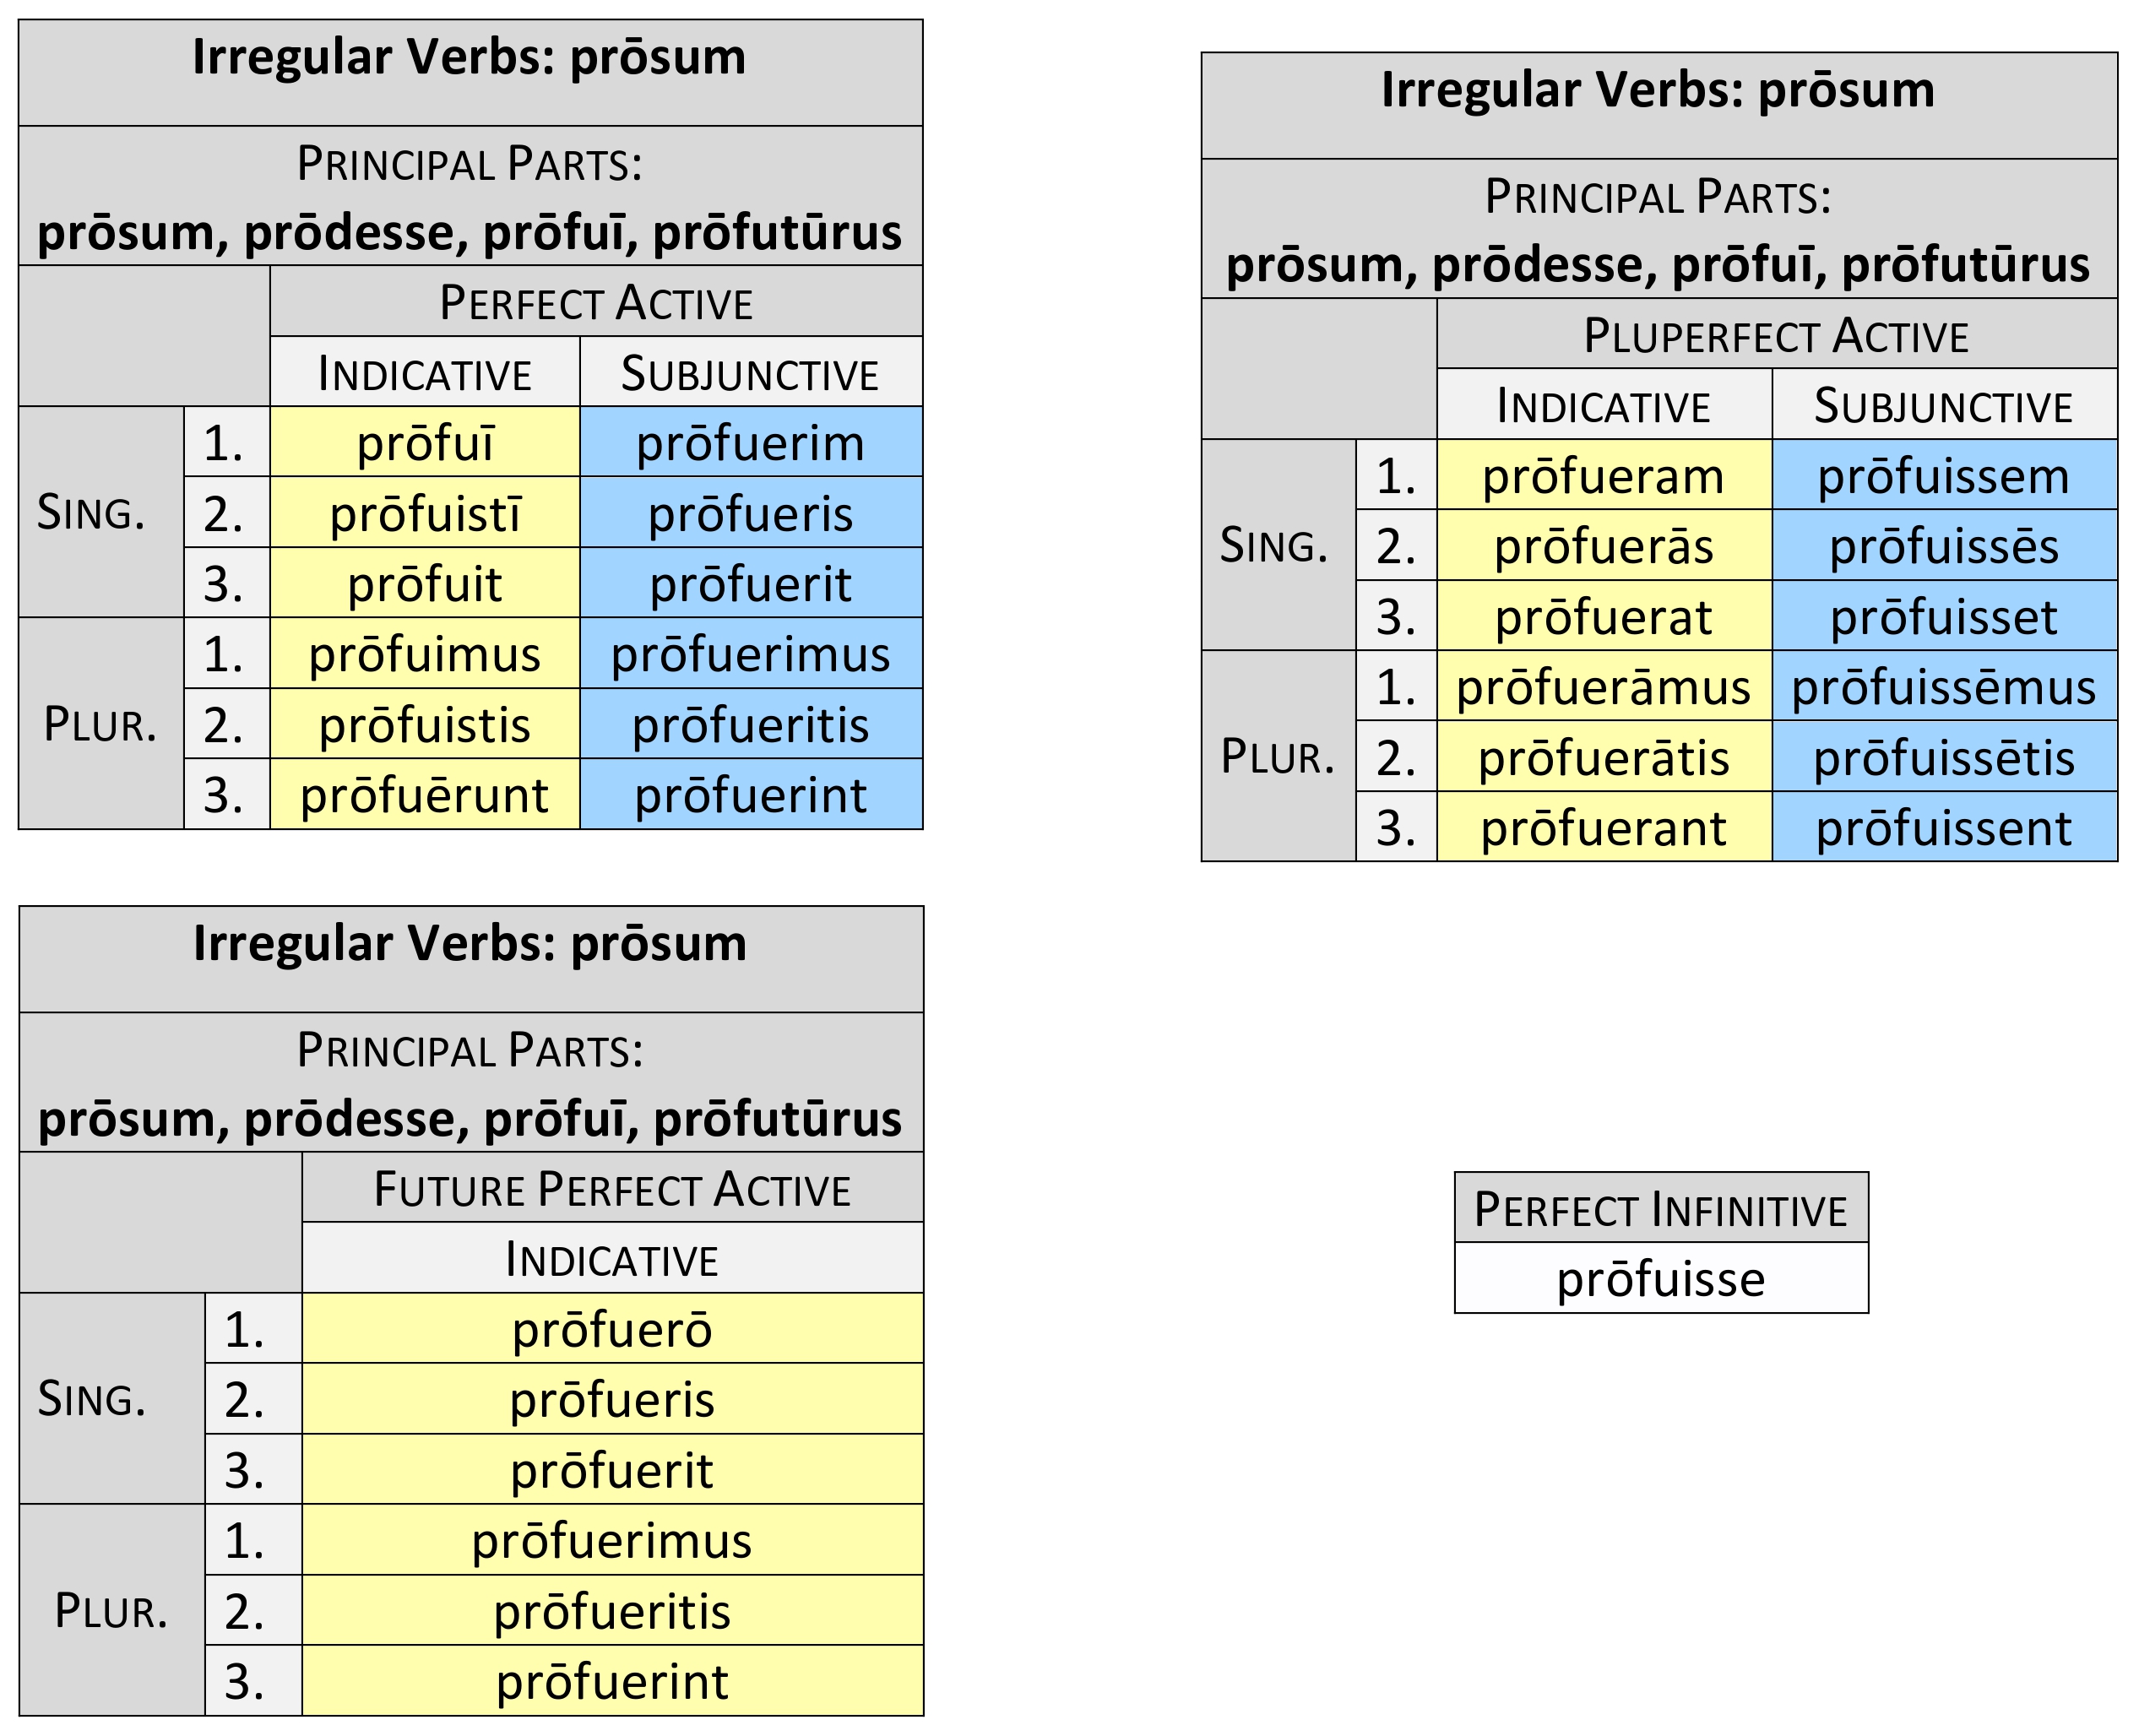 irregular verb prōsum perfect system synposis